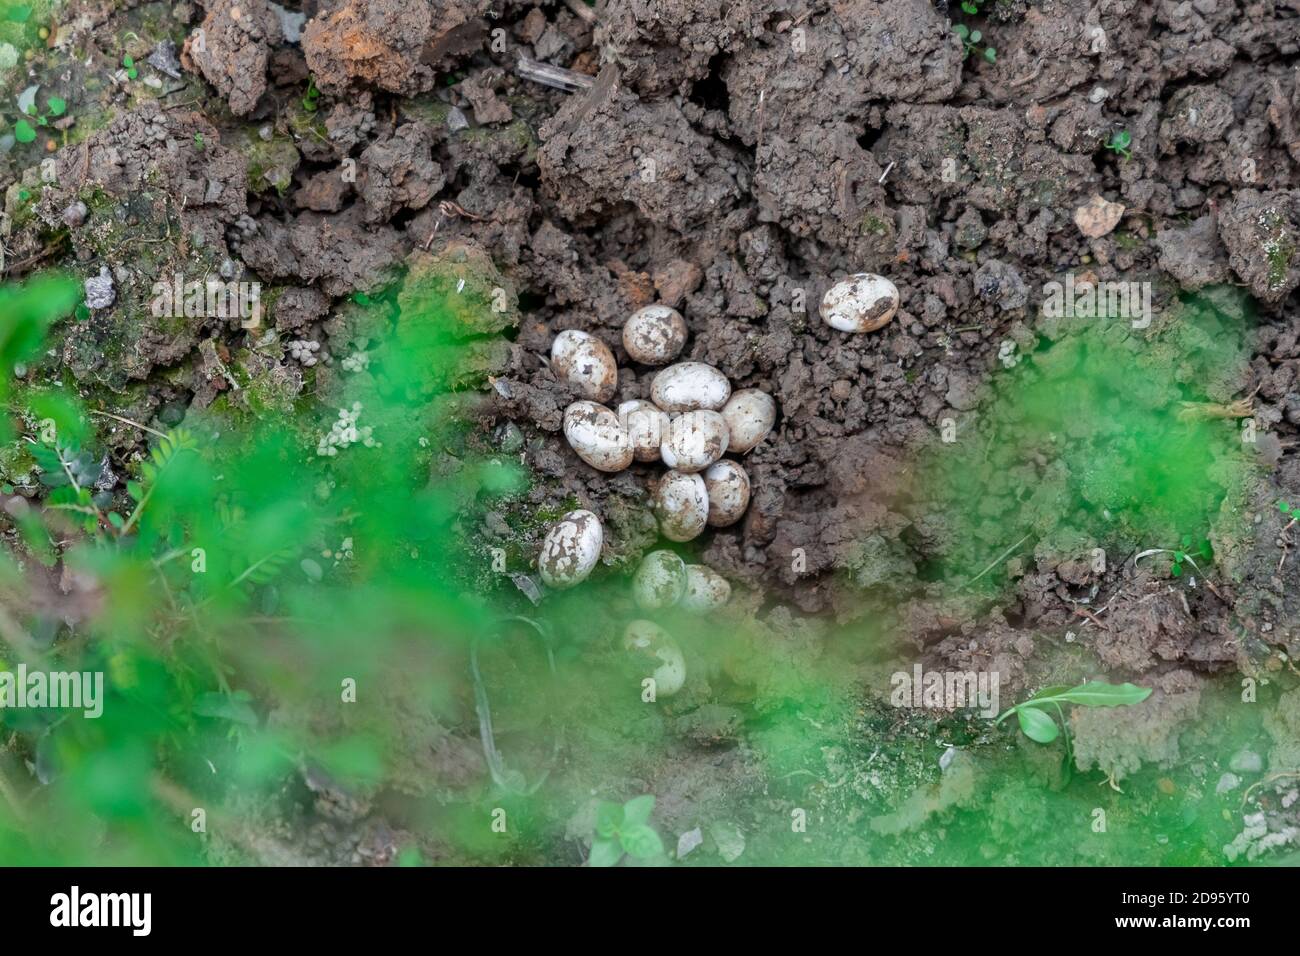 Closeup of Common Watersnake Eggs in the garden soil. Stock Photo